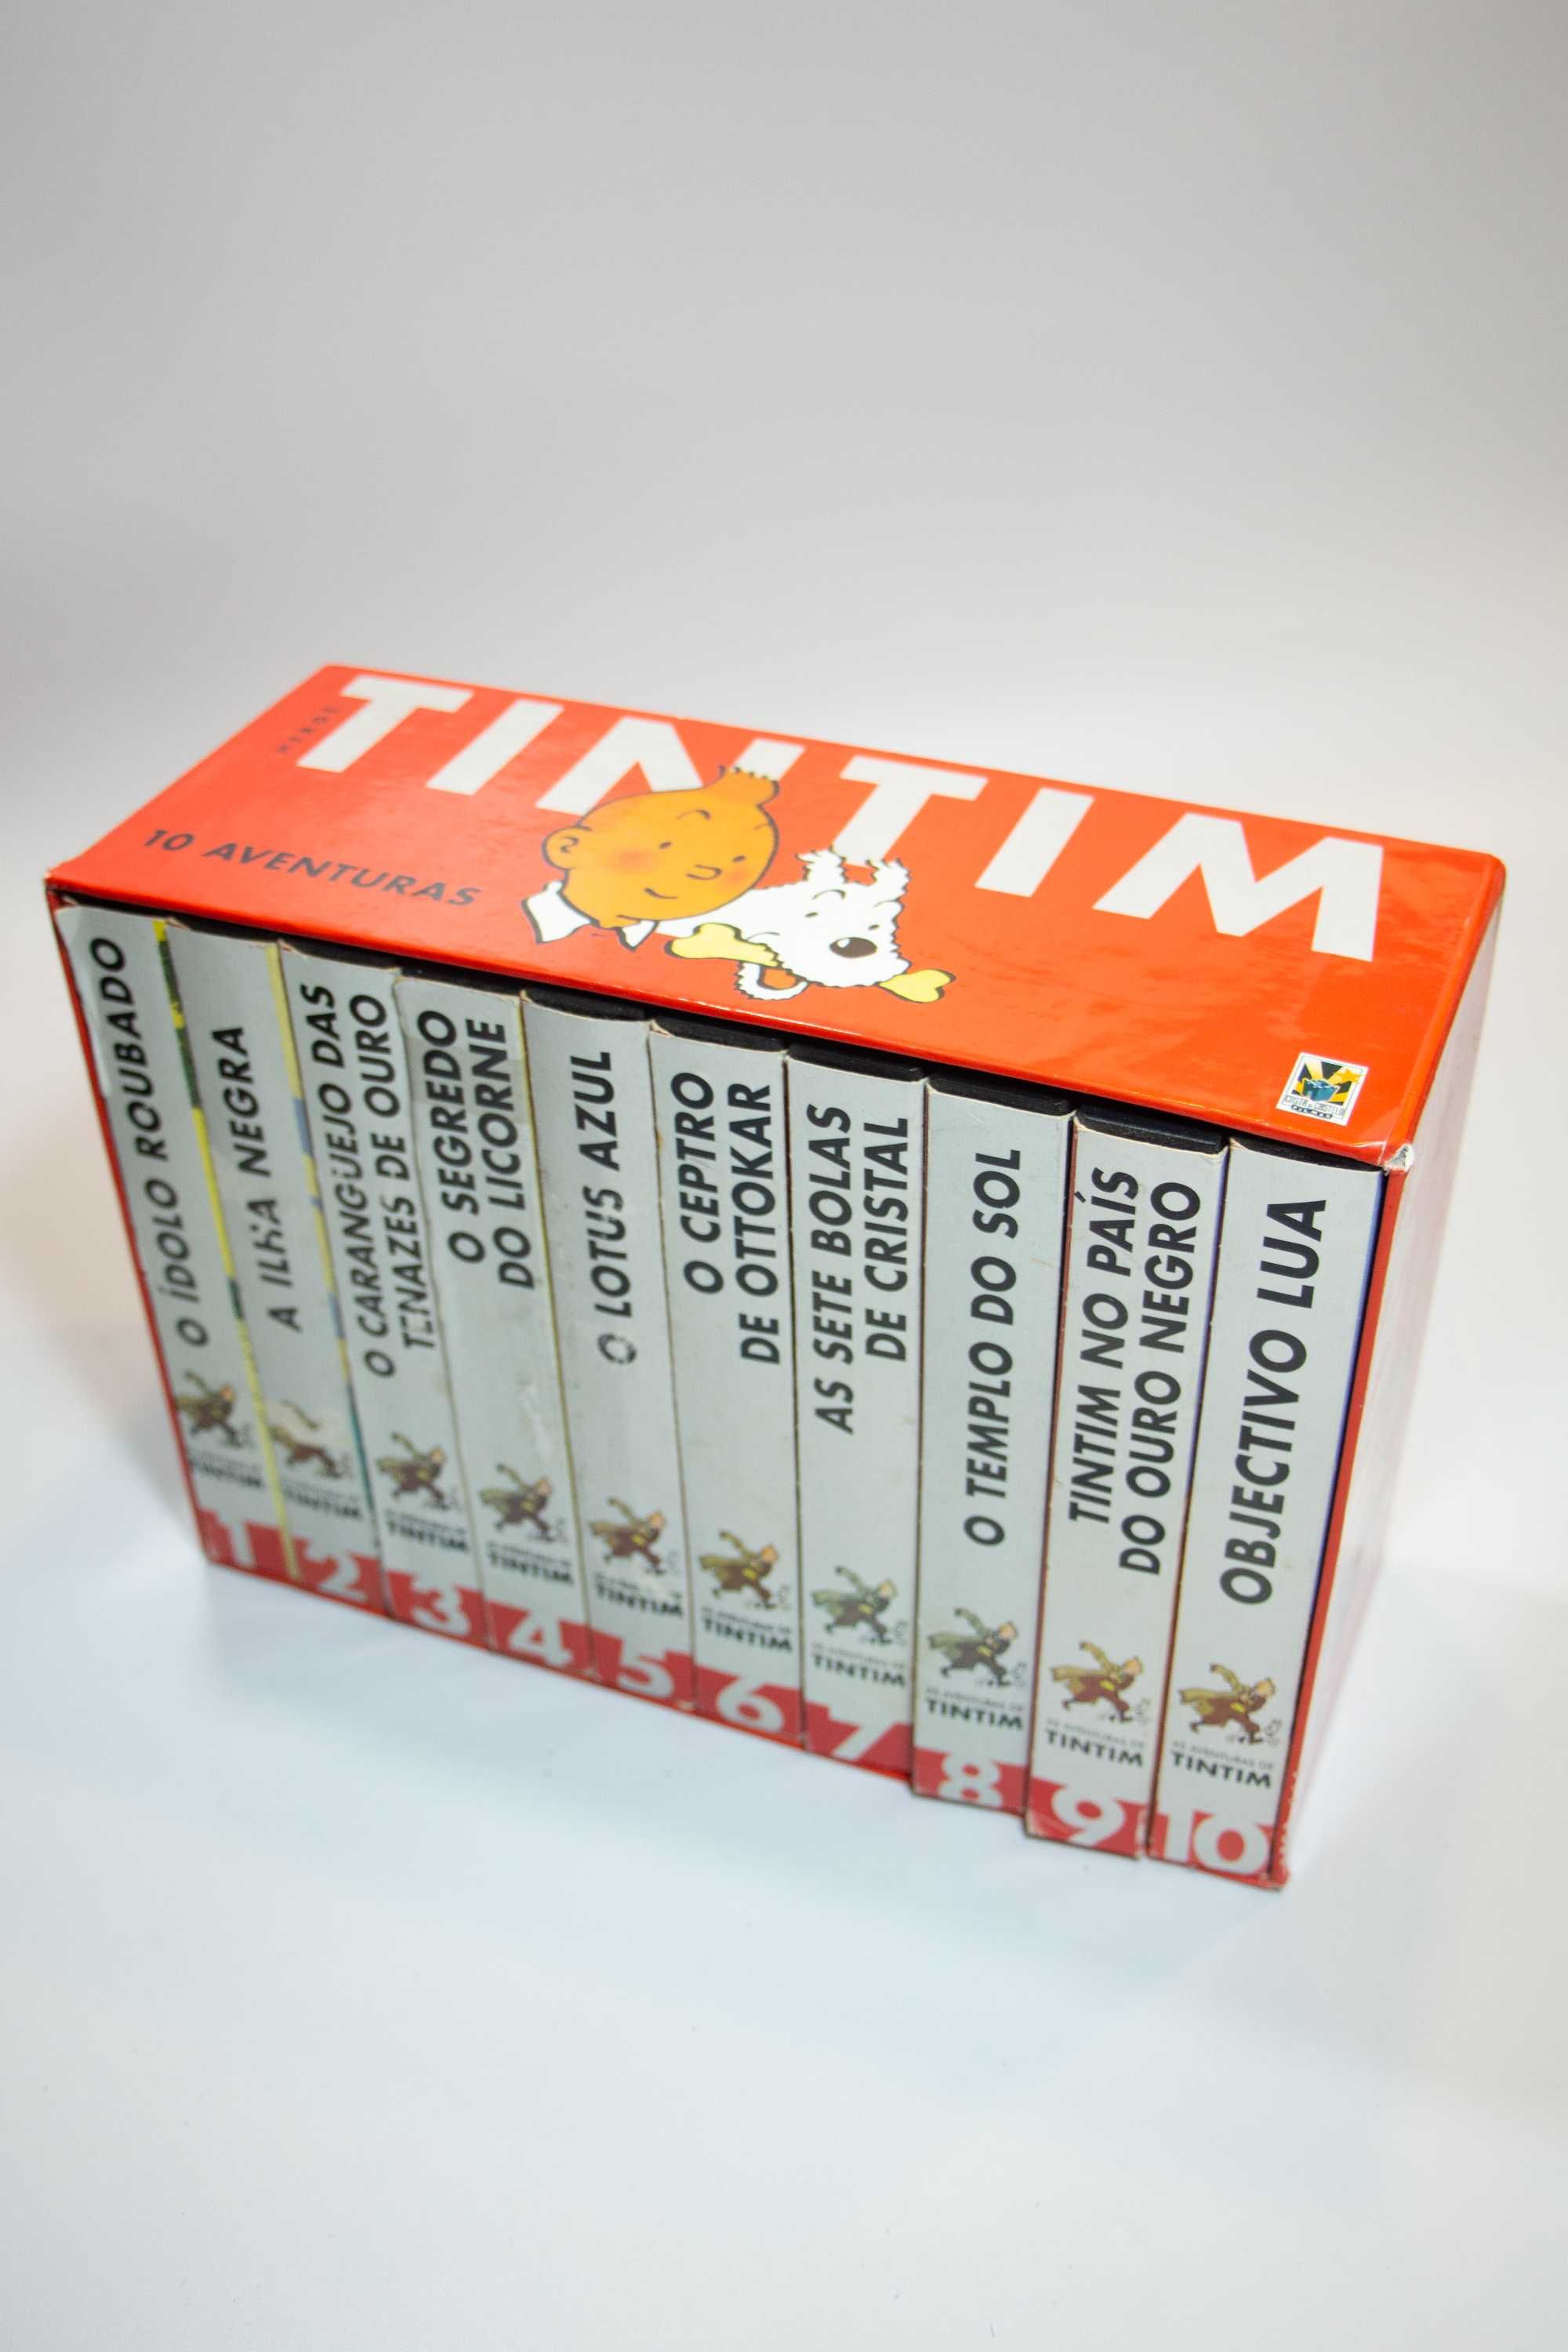 TINTIM - 10 Aventuras em VHS